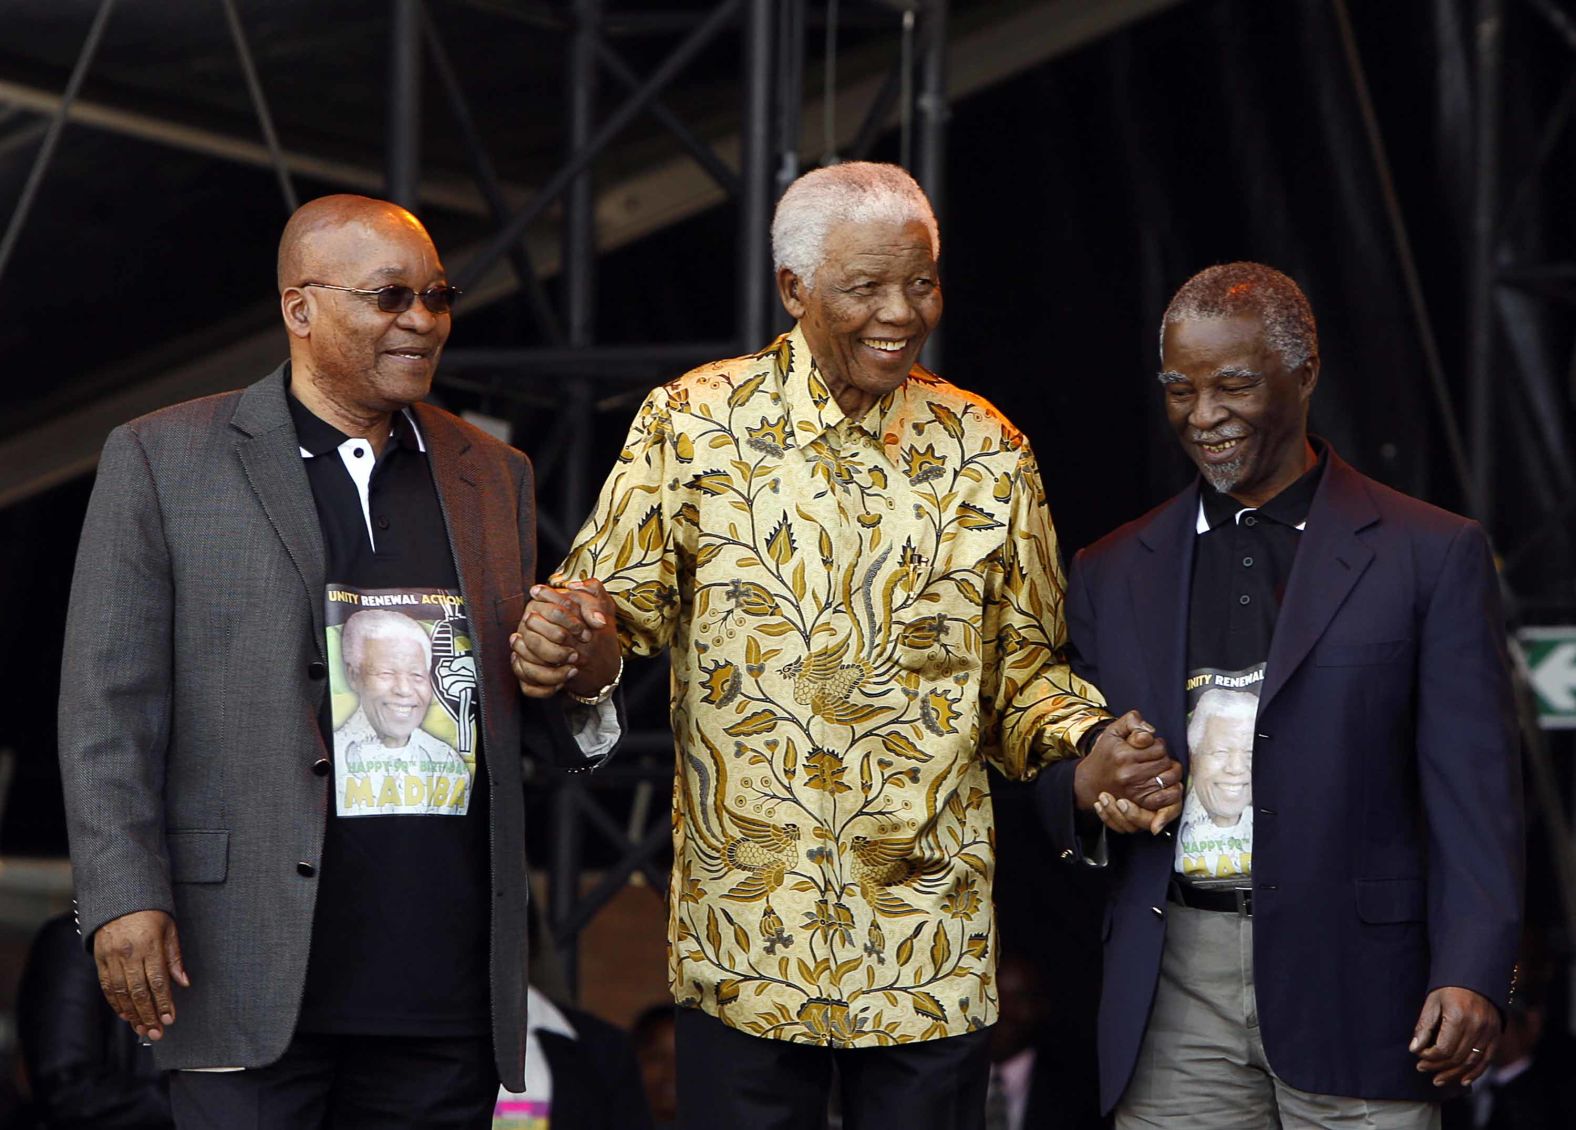 From left, Zuma, Mandela and Mbeki arrive on stage for Mandela's 90th birthday celebration in August 2008.